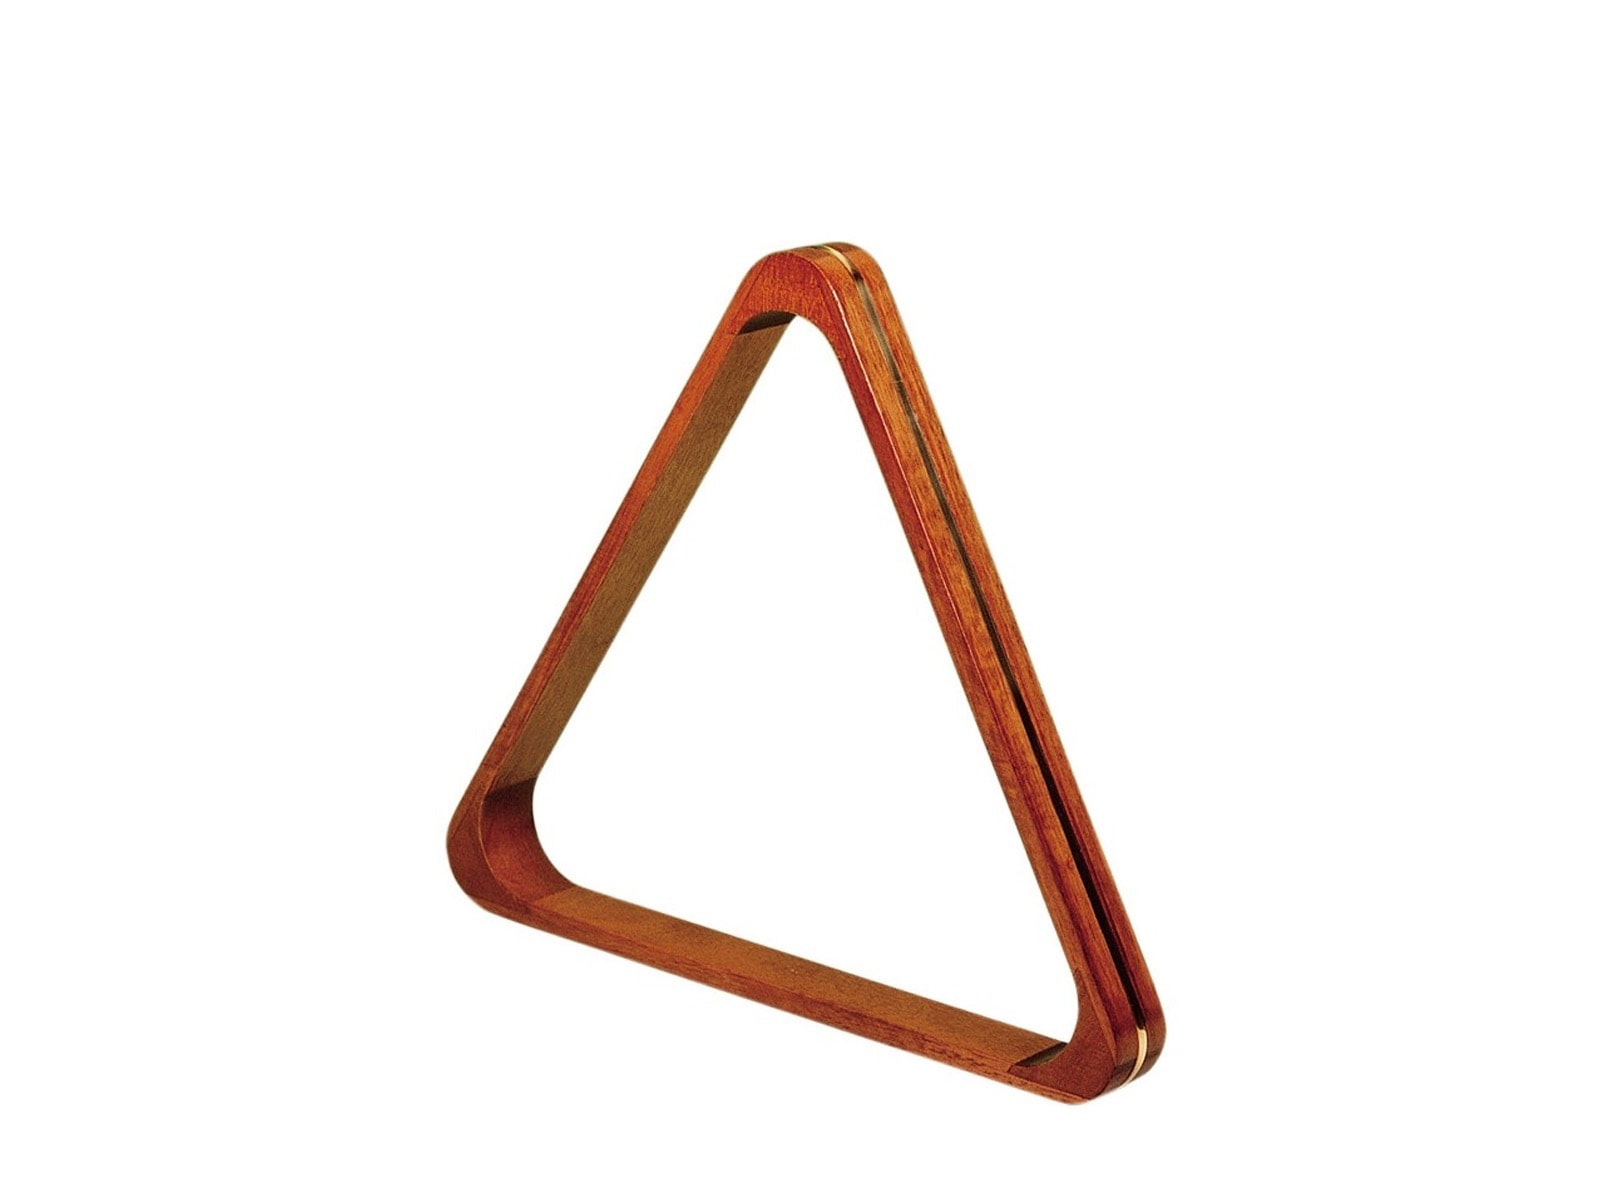 Triangle de billard bois de pin décoré 2 1/4 - Accessoire billard